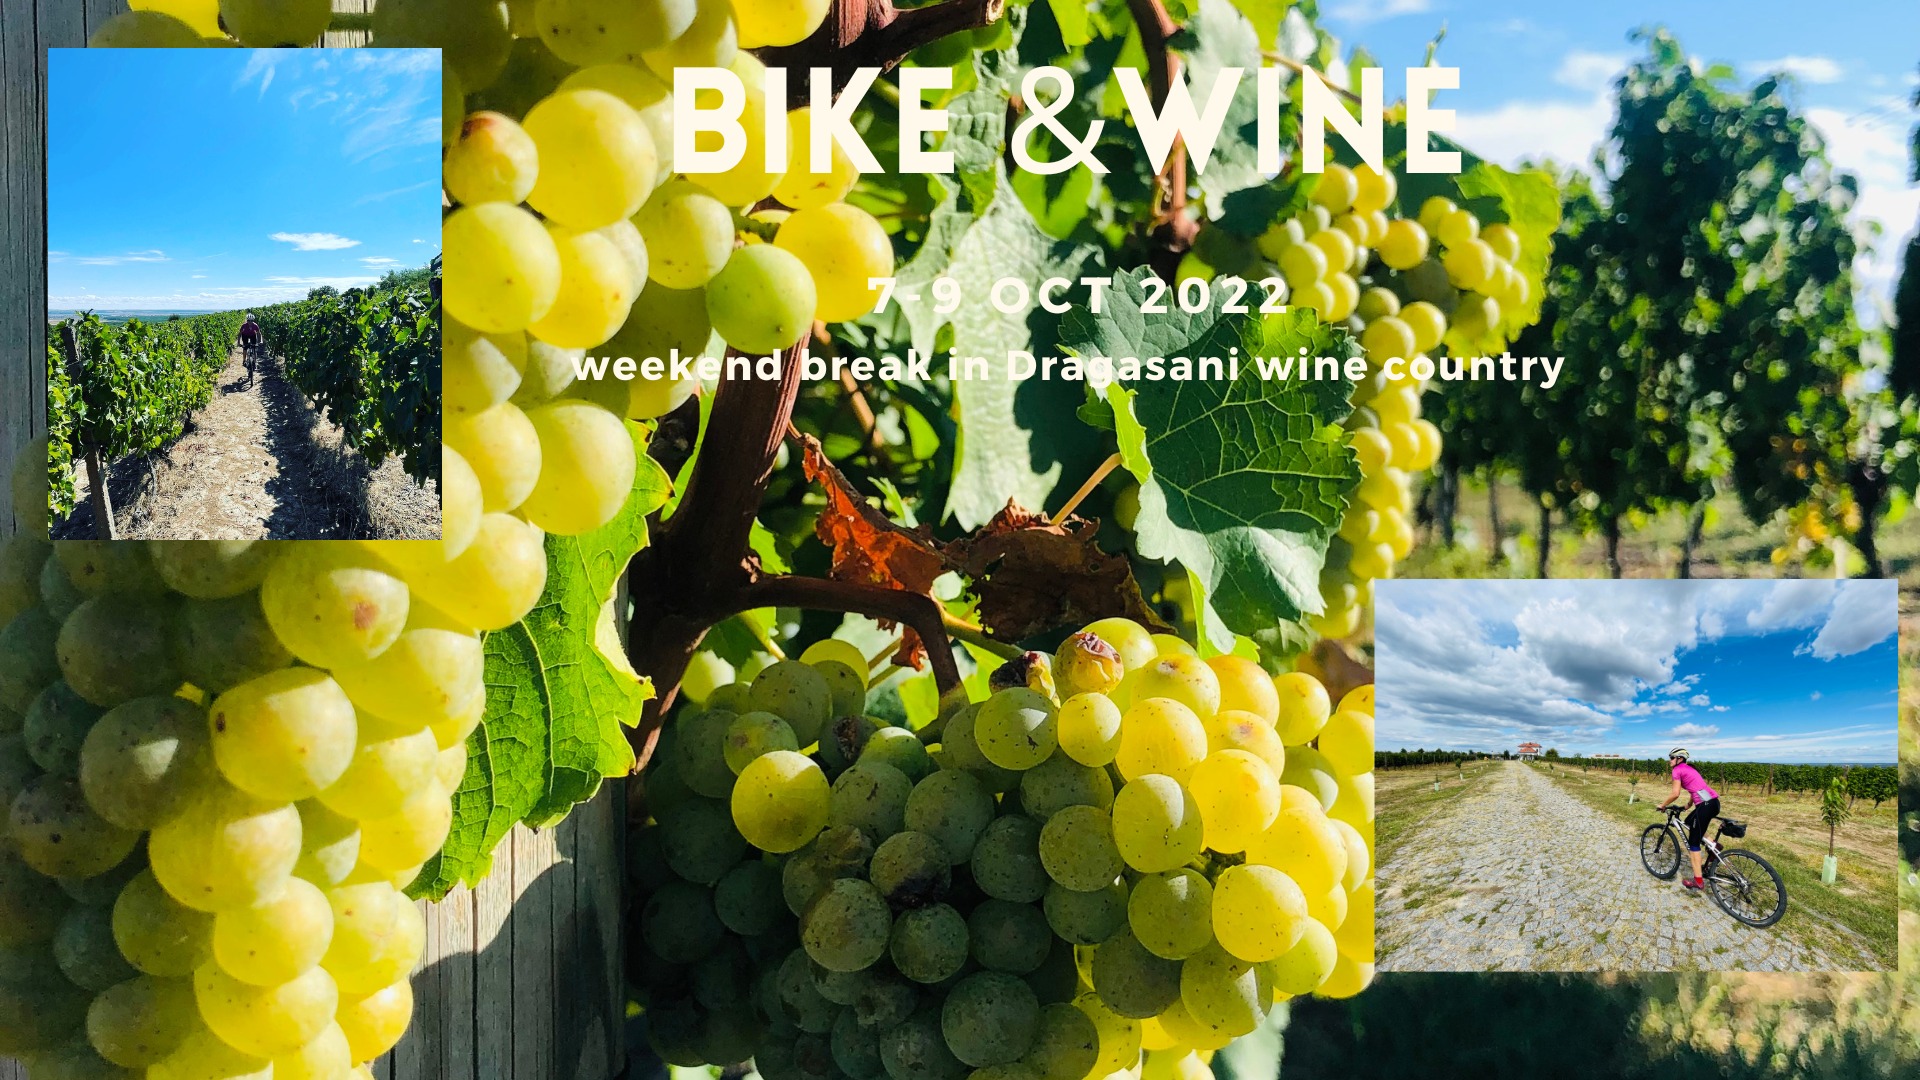 Bike&Wine weekend in Dragasani